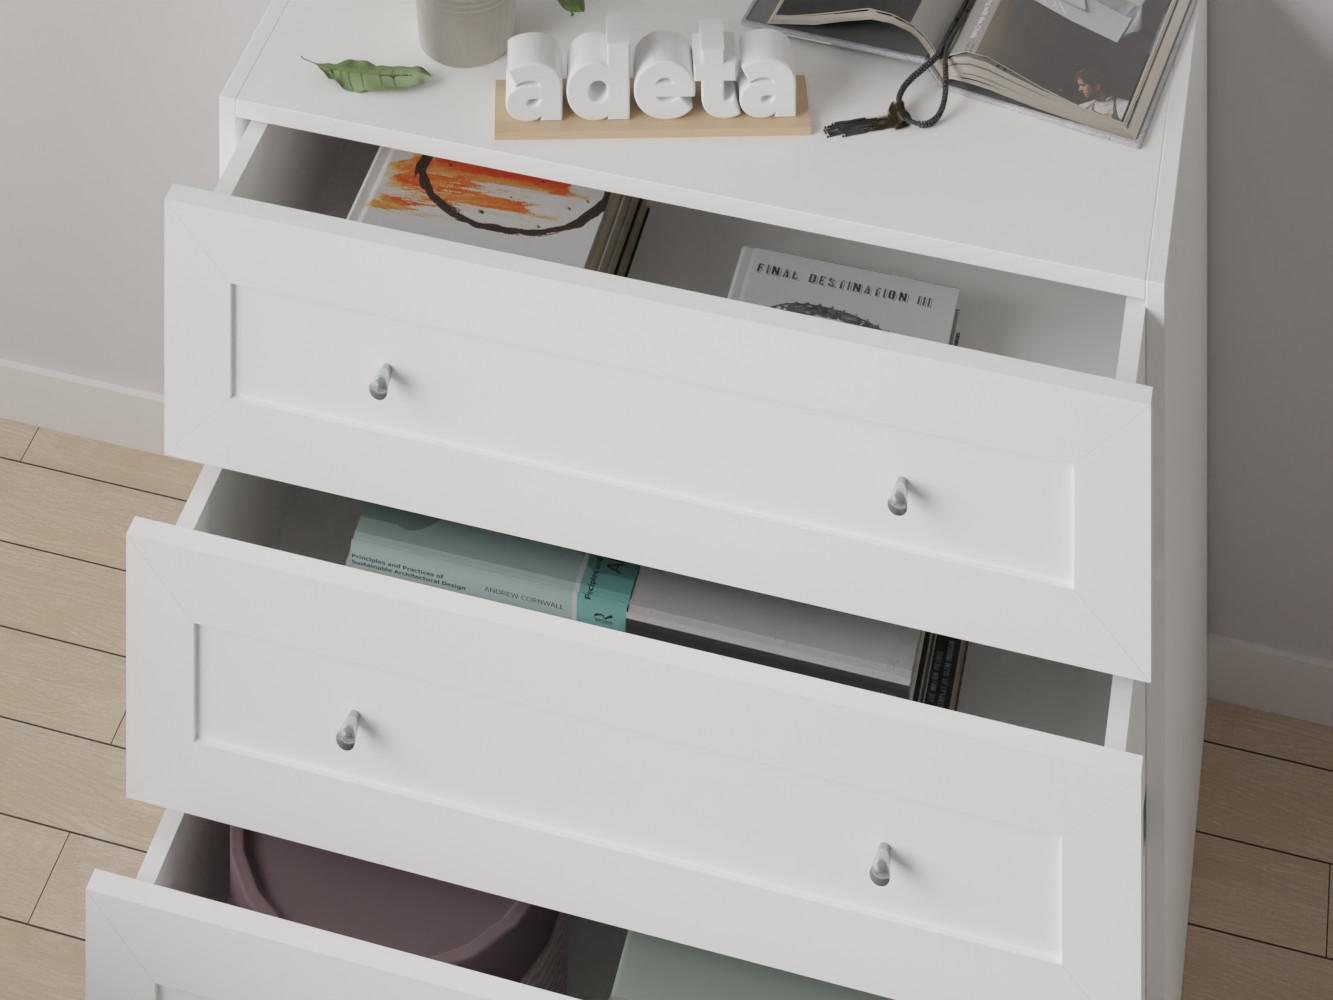 Изображение товара Комод Билли 218 white ИКЕА (IKEA), 80x45x77 см на сайте adeta.ru